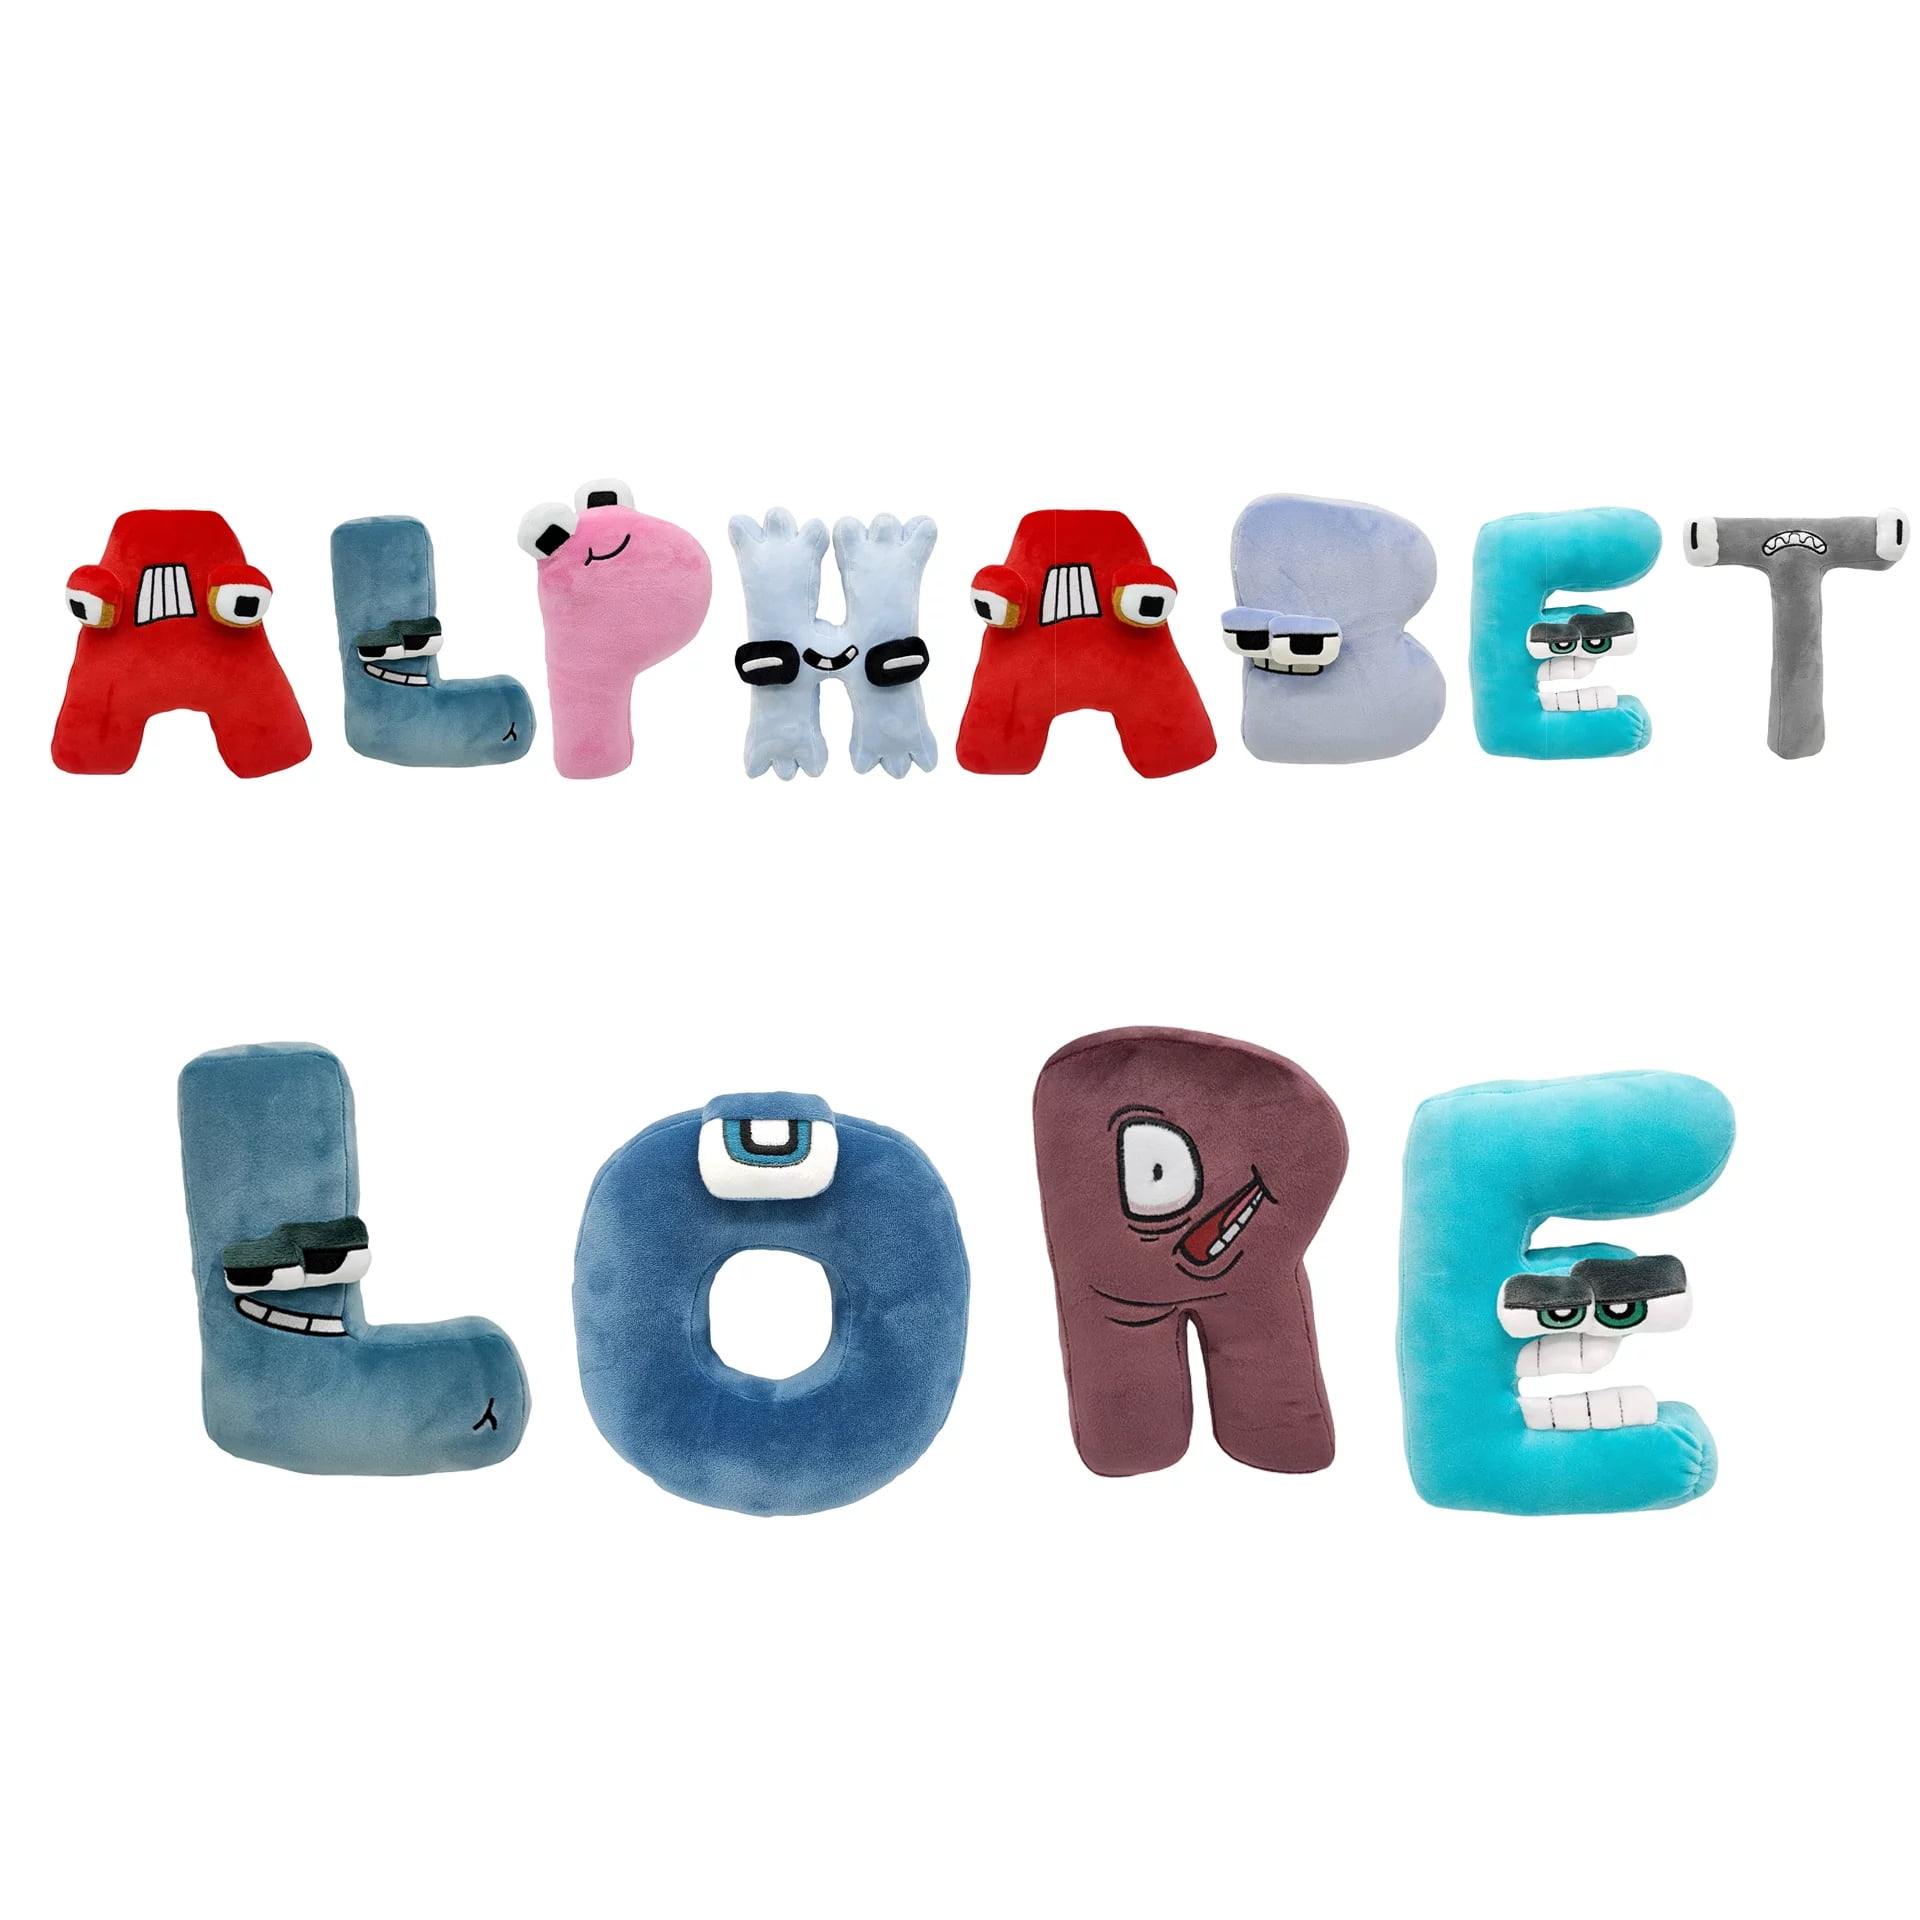 Alphabet Lore Plush K Toys 7.6 - Alphabet Lore Plush